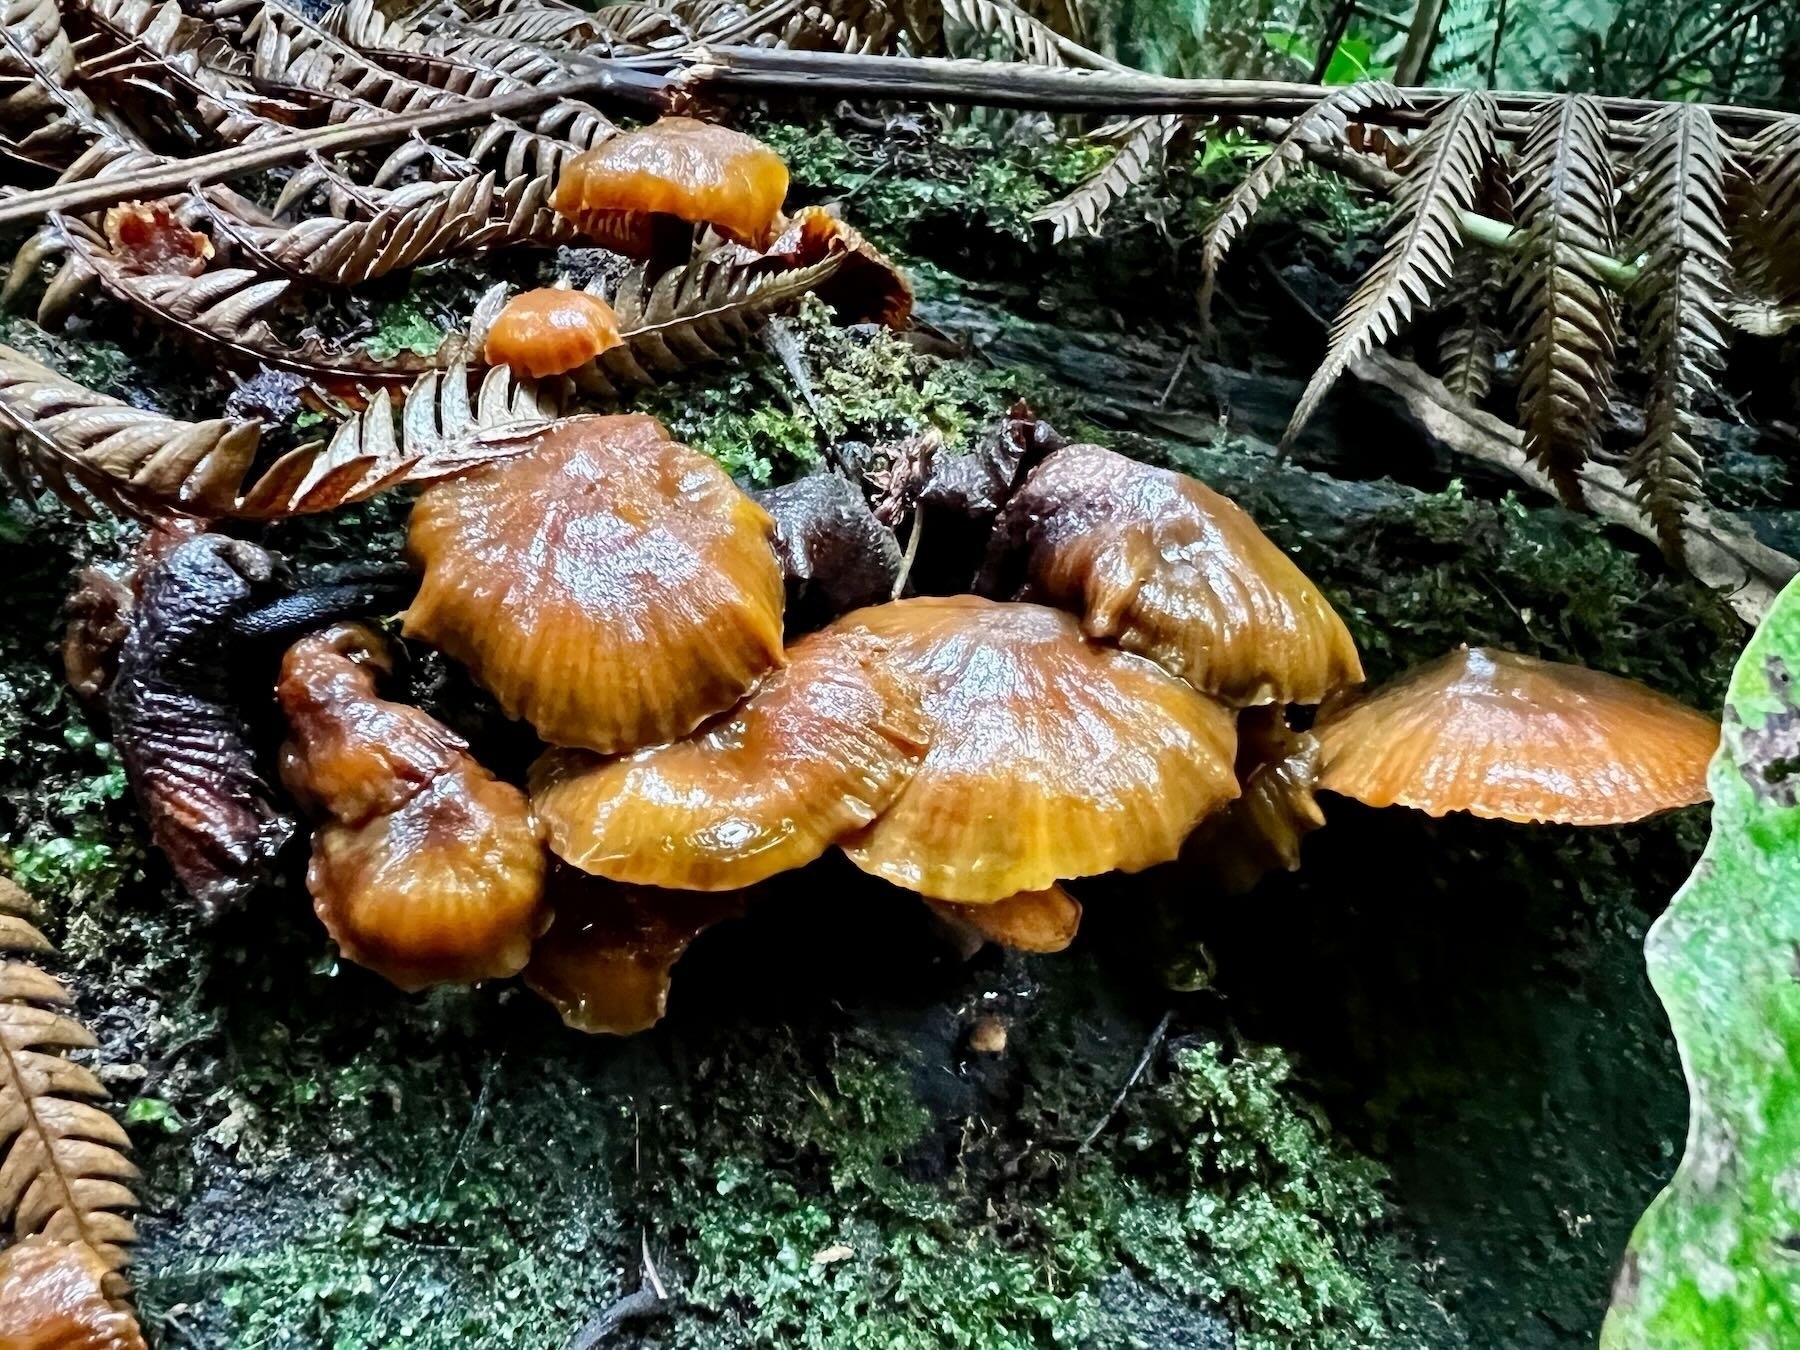 Brown-orange-wet looking fungi. 